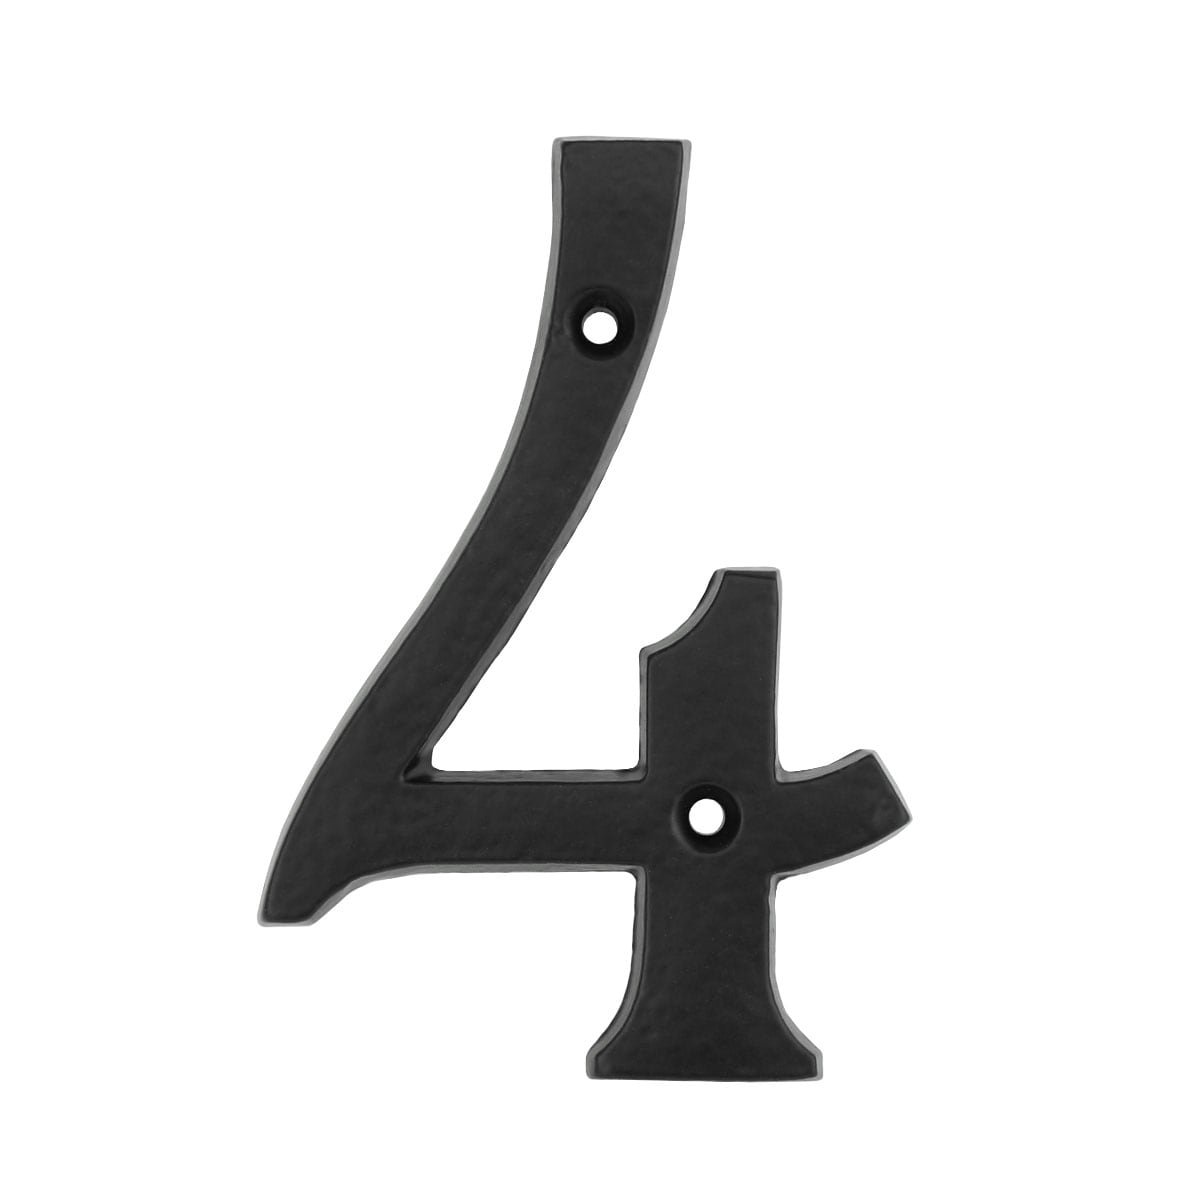 Geveldecoratie Nummers & Letters Gevelnummer 4 vier oud zwart ijzer - 101 mm